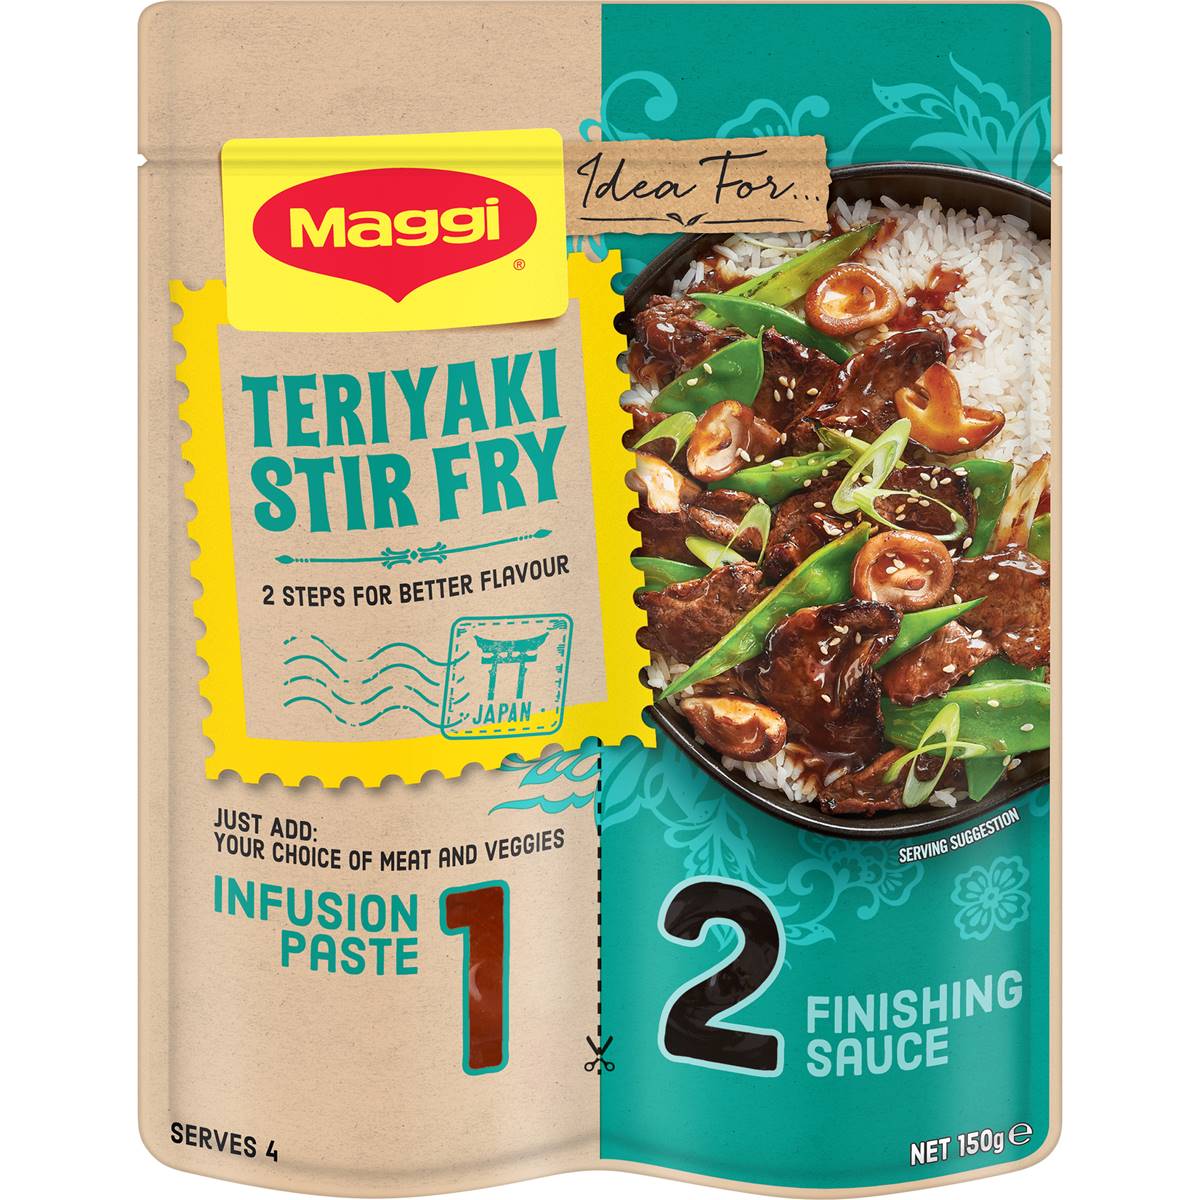 Calories in Maggi Stir Fry Asian Style Teriyaki Sesame Flavour calcount